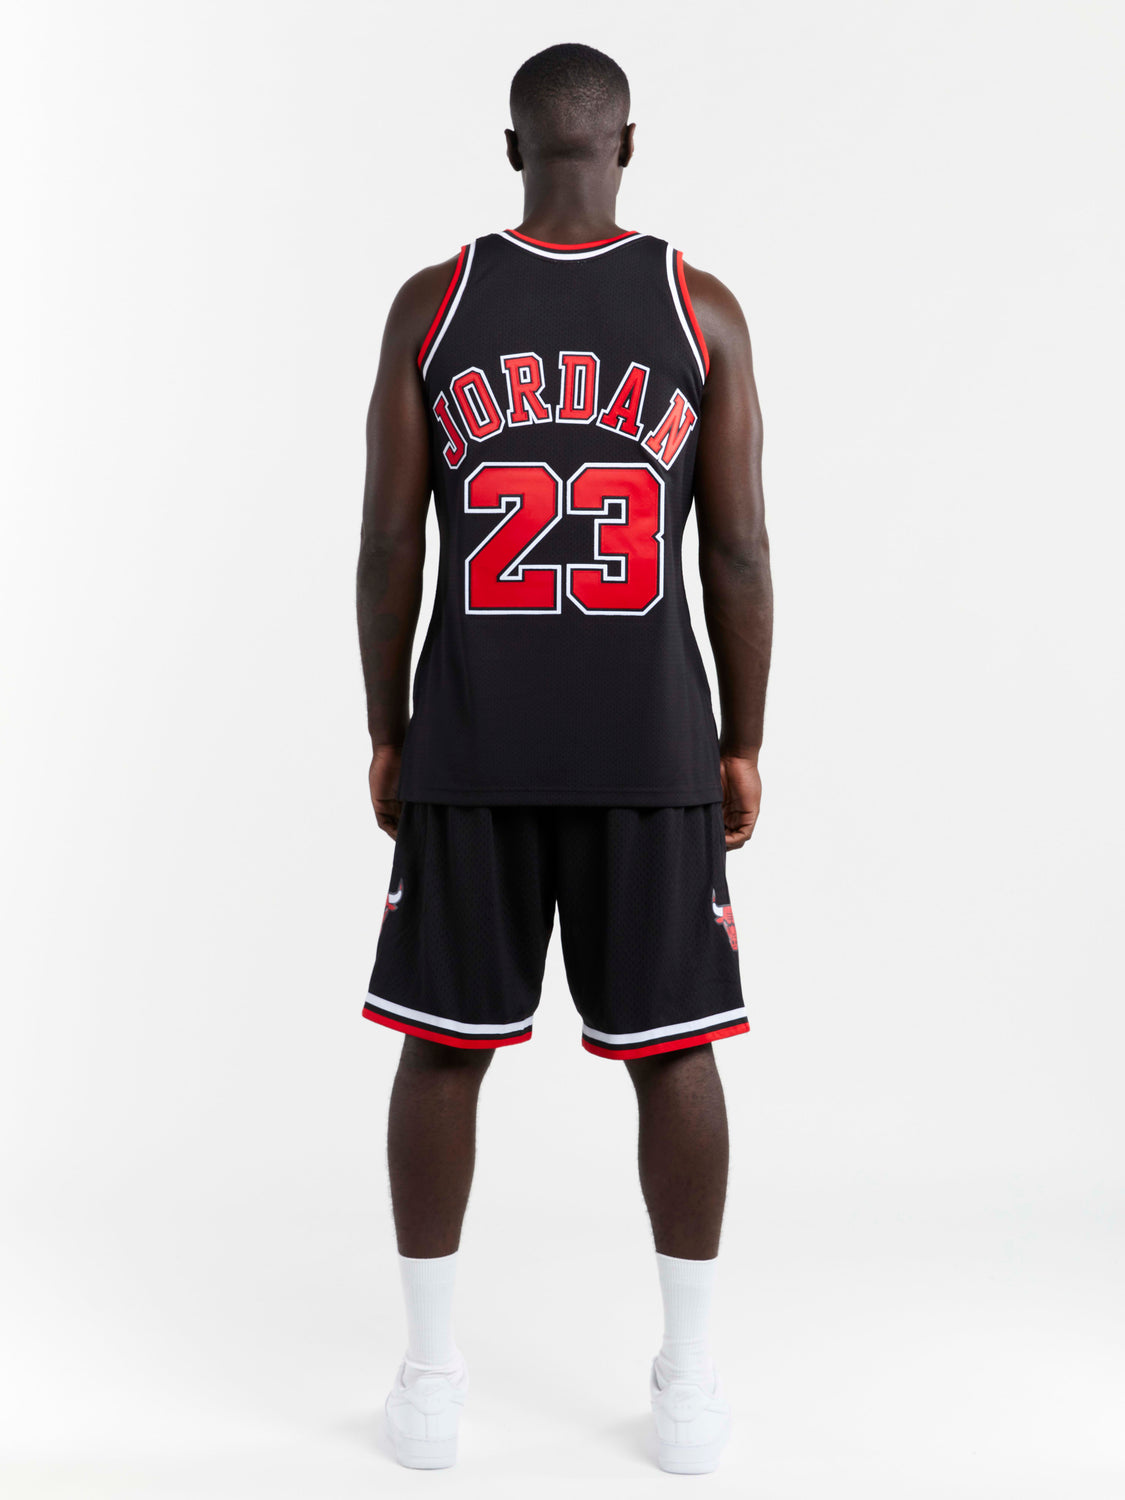 Michael Jordan Signed '97-'98 Alternate Bulls Jersey